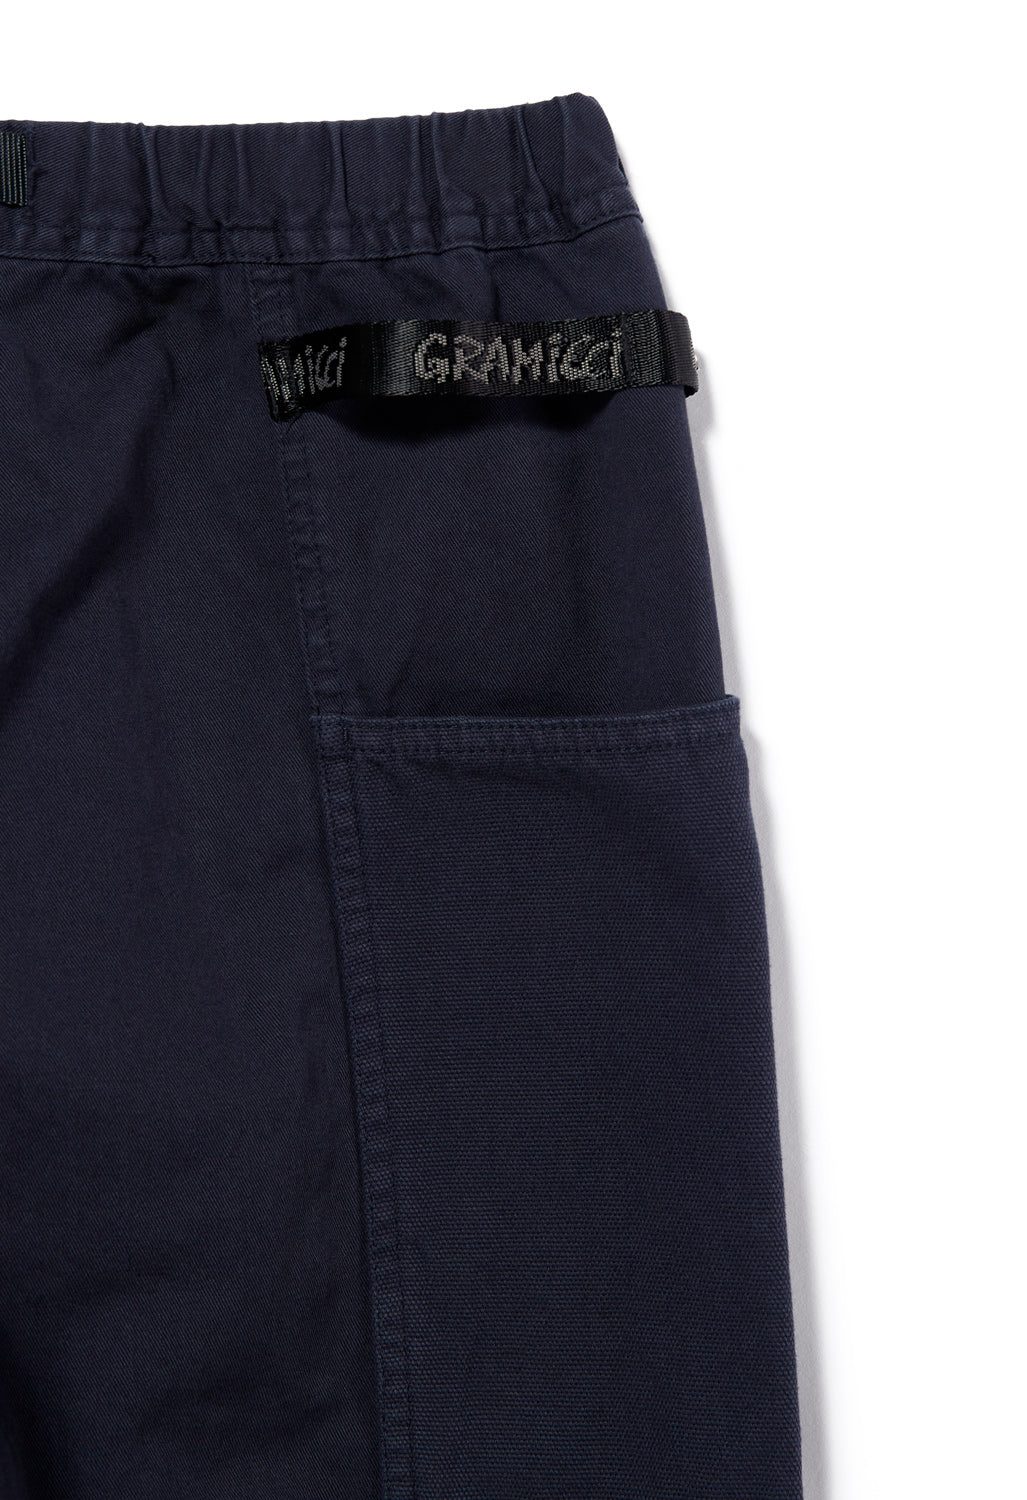 Gramicci Men's Gadget Pants - Double Navy